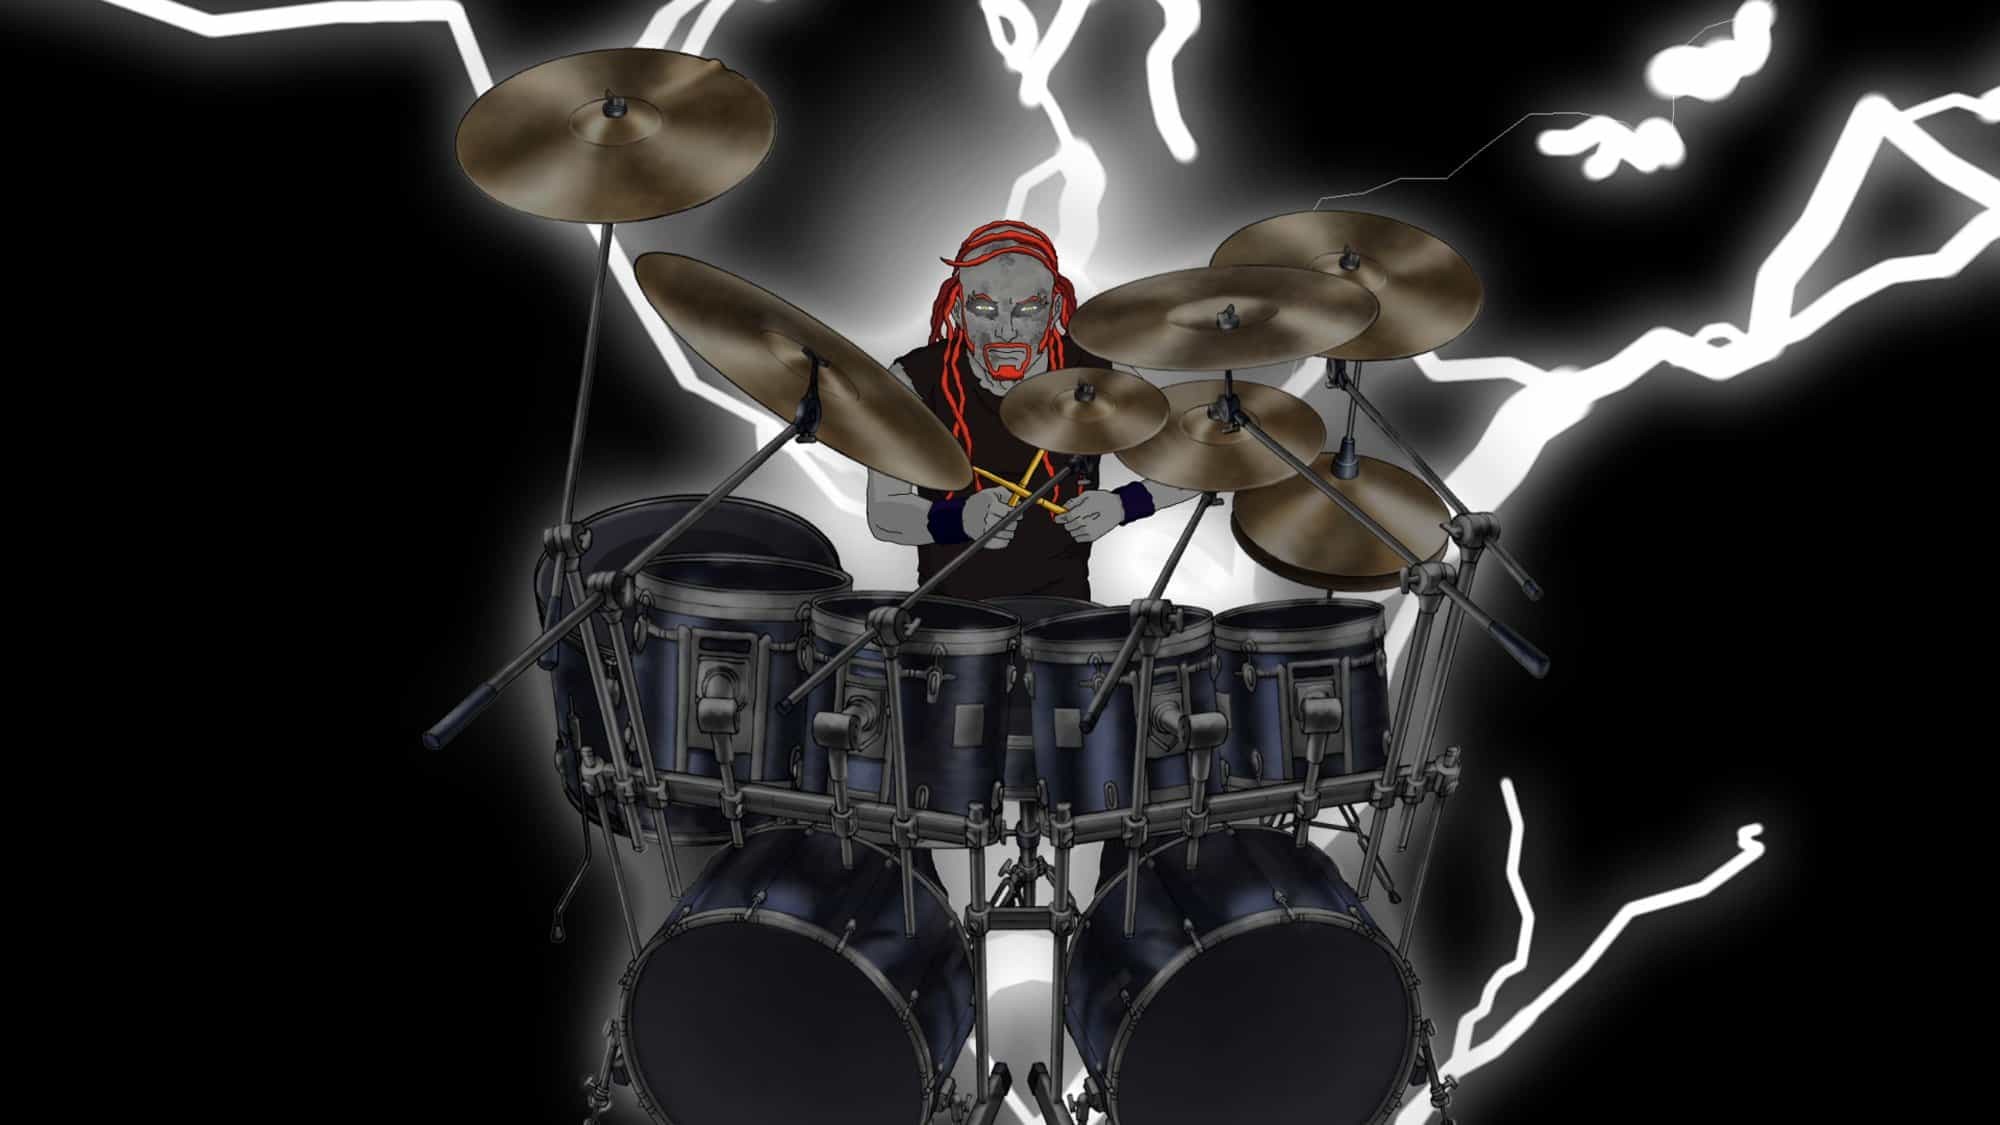 2000x1125 Dethklok heavy metal music cartoons hard rock band groups metalocalypse  drums wallpaper